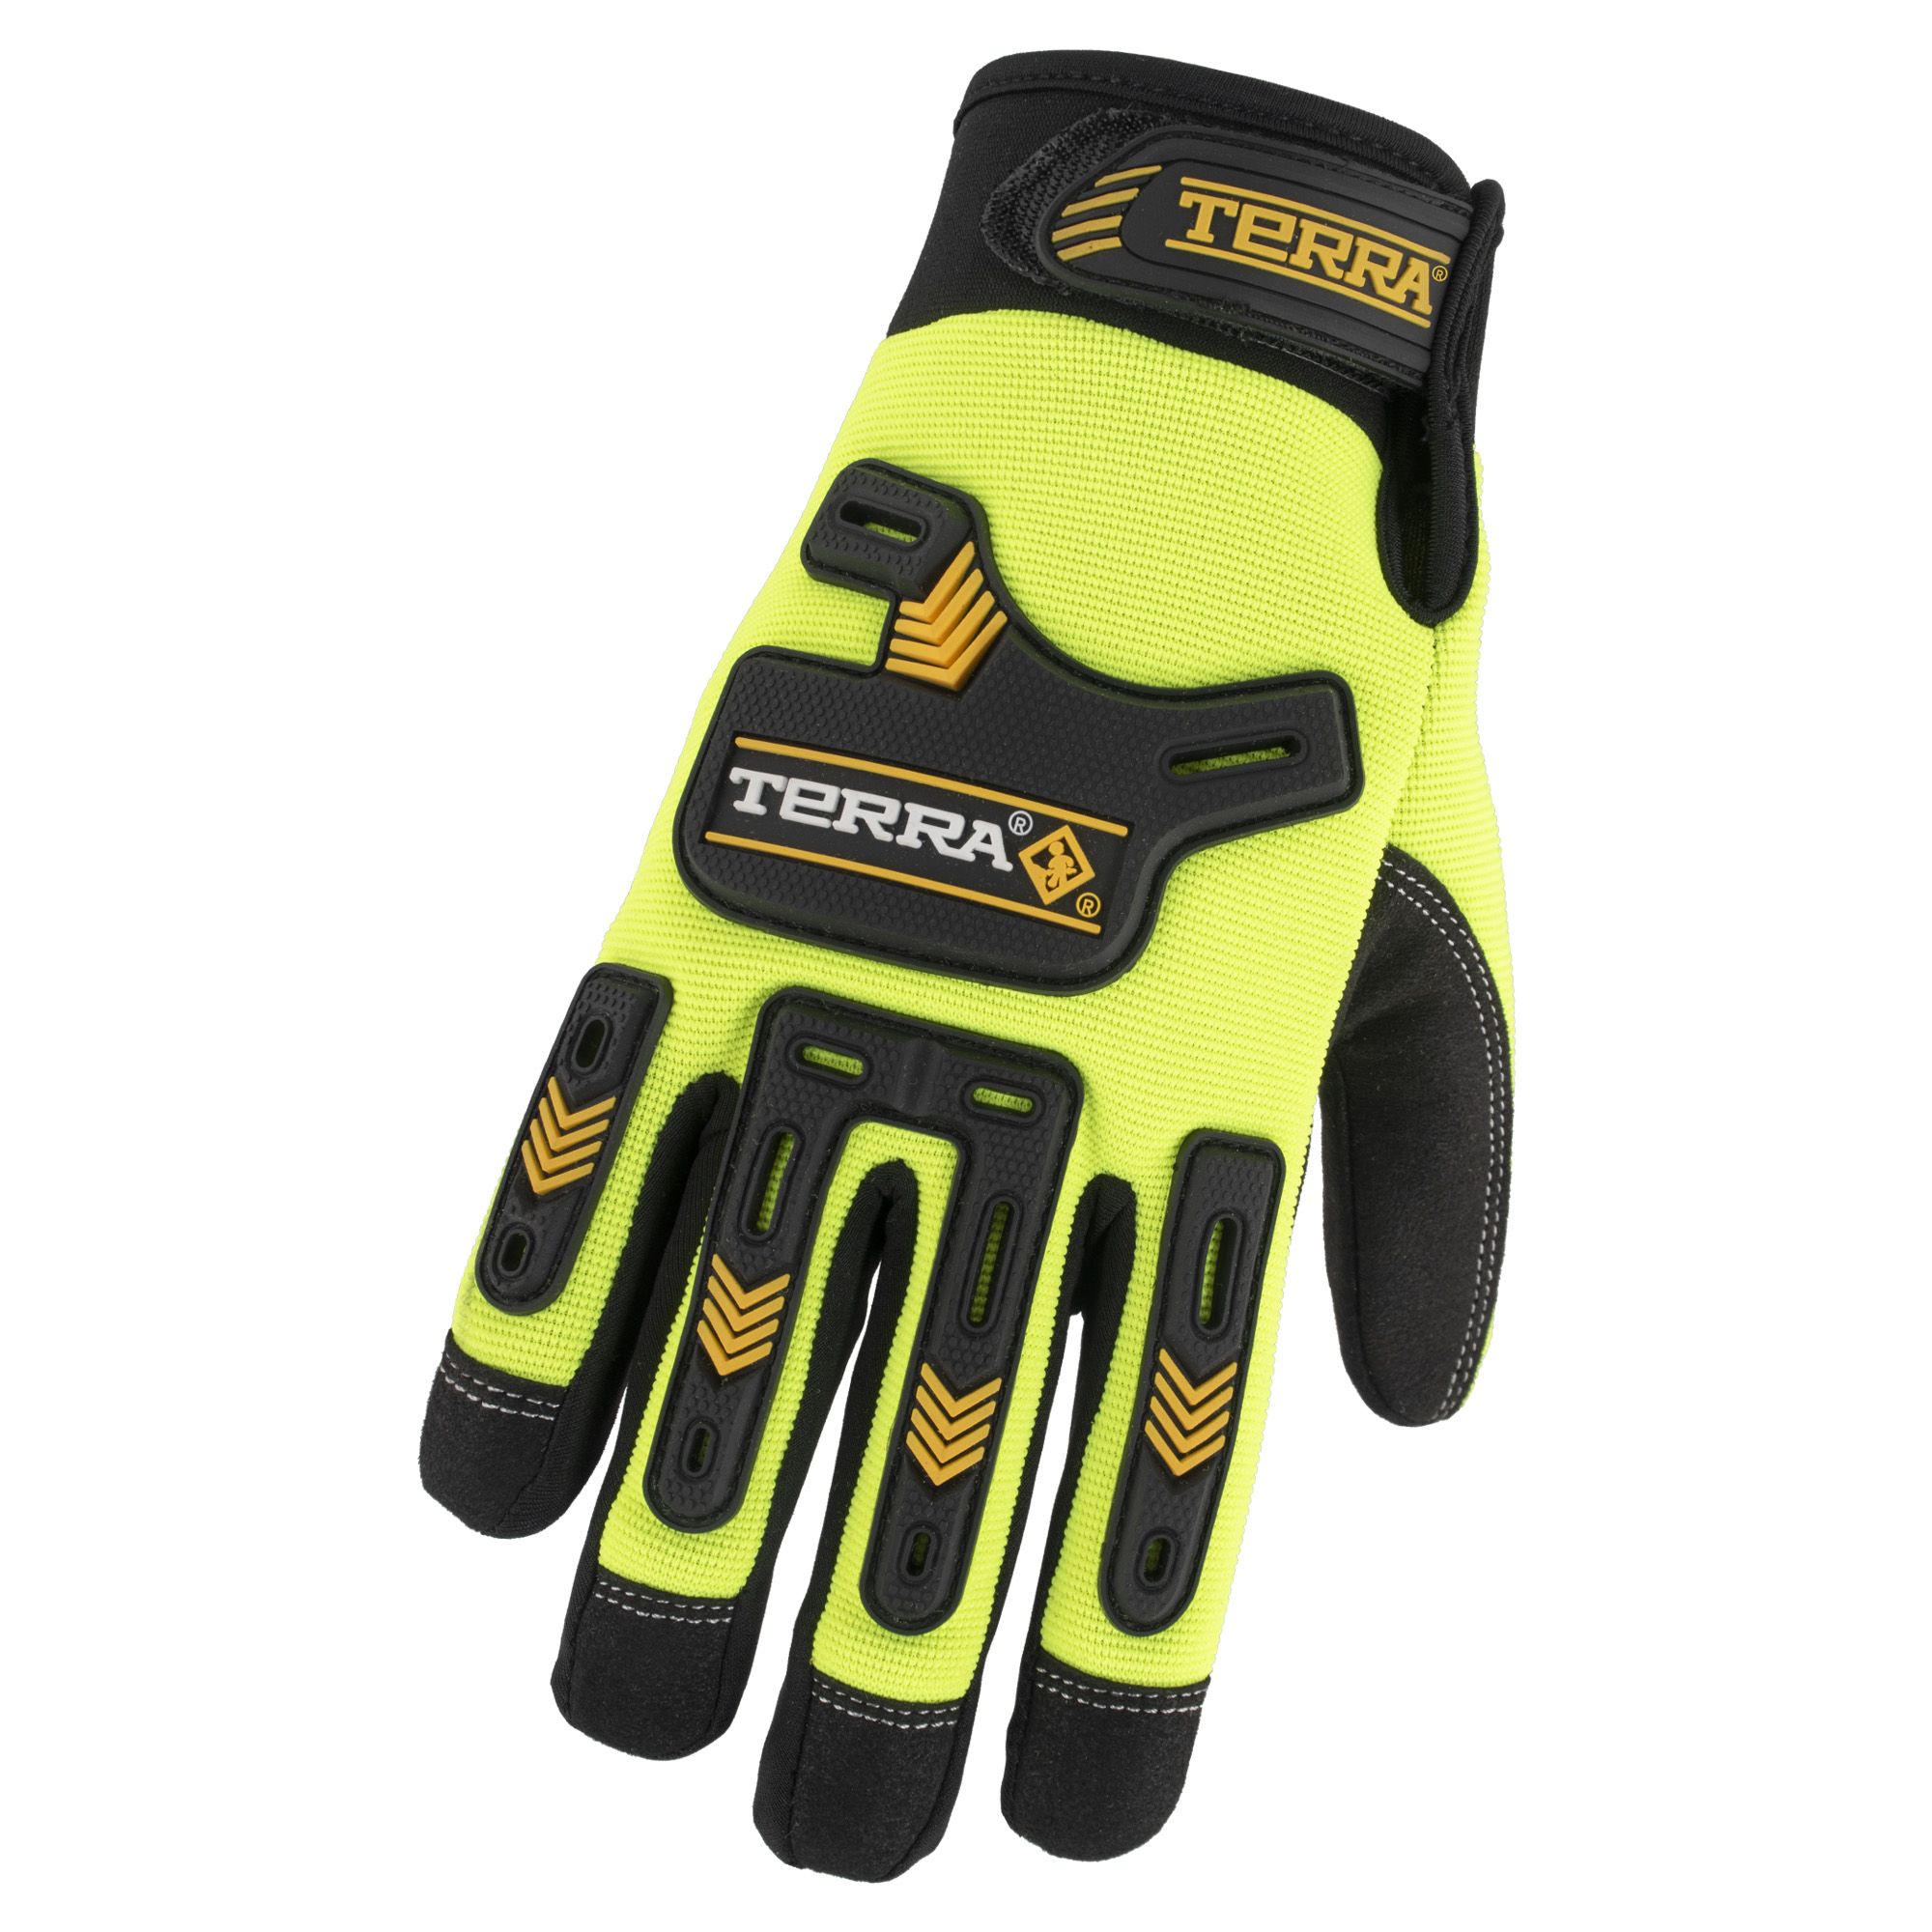 Terra Hi-Vis Impact Resistant Performance Work Gloves with Wrist Strap